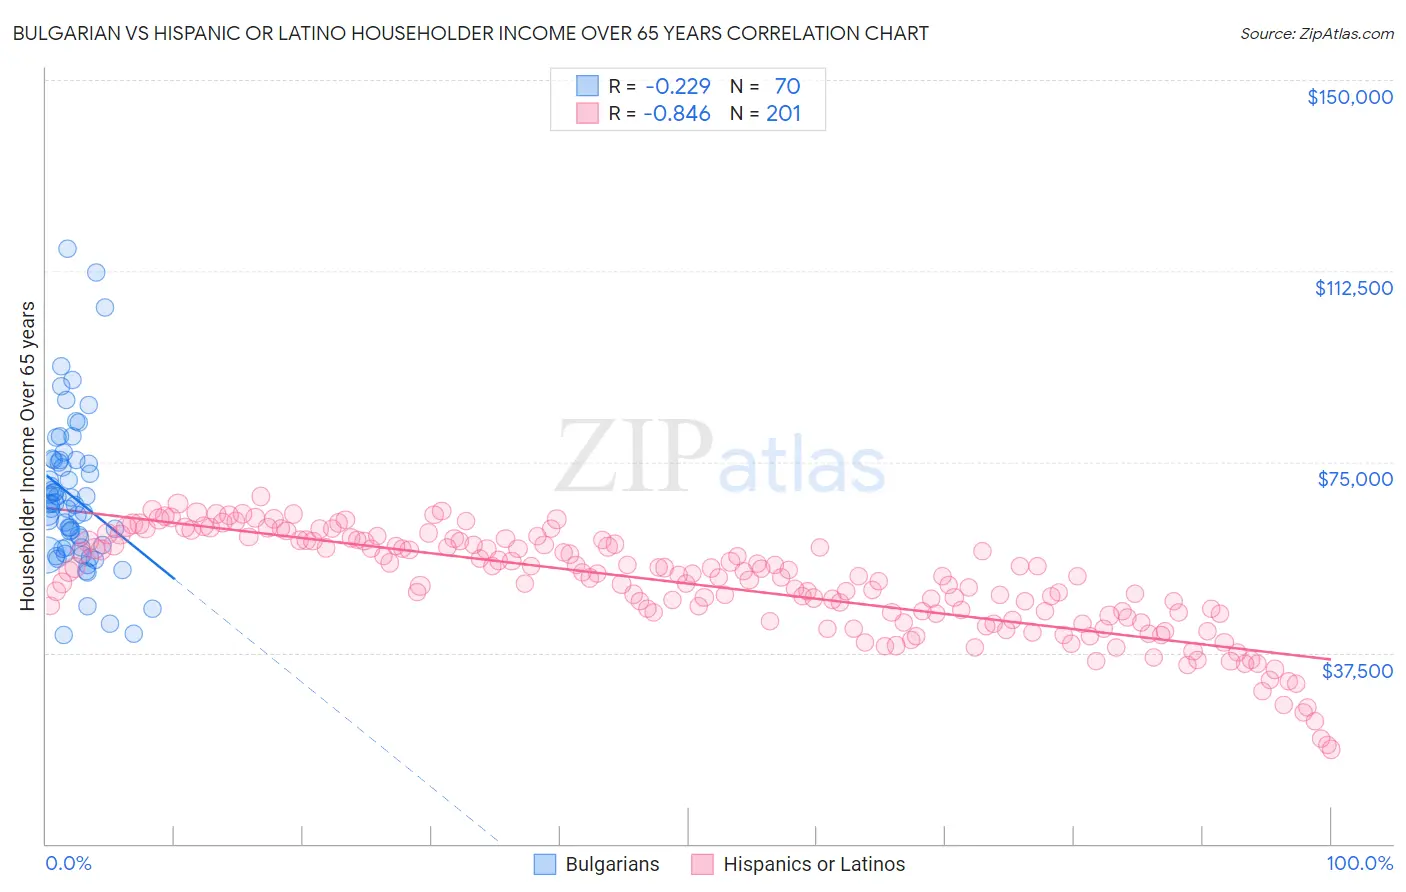 Bulgarian vs Hispanic or Latino Householder Income Over 65 years